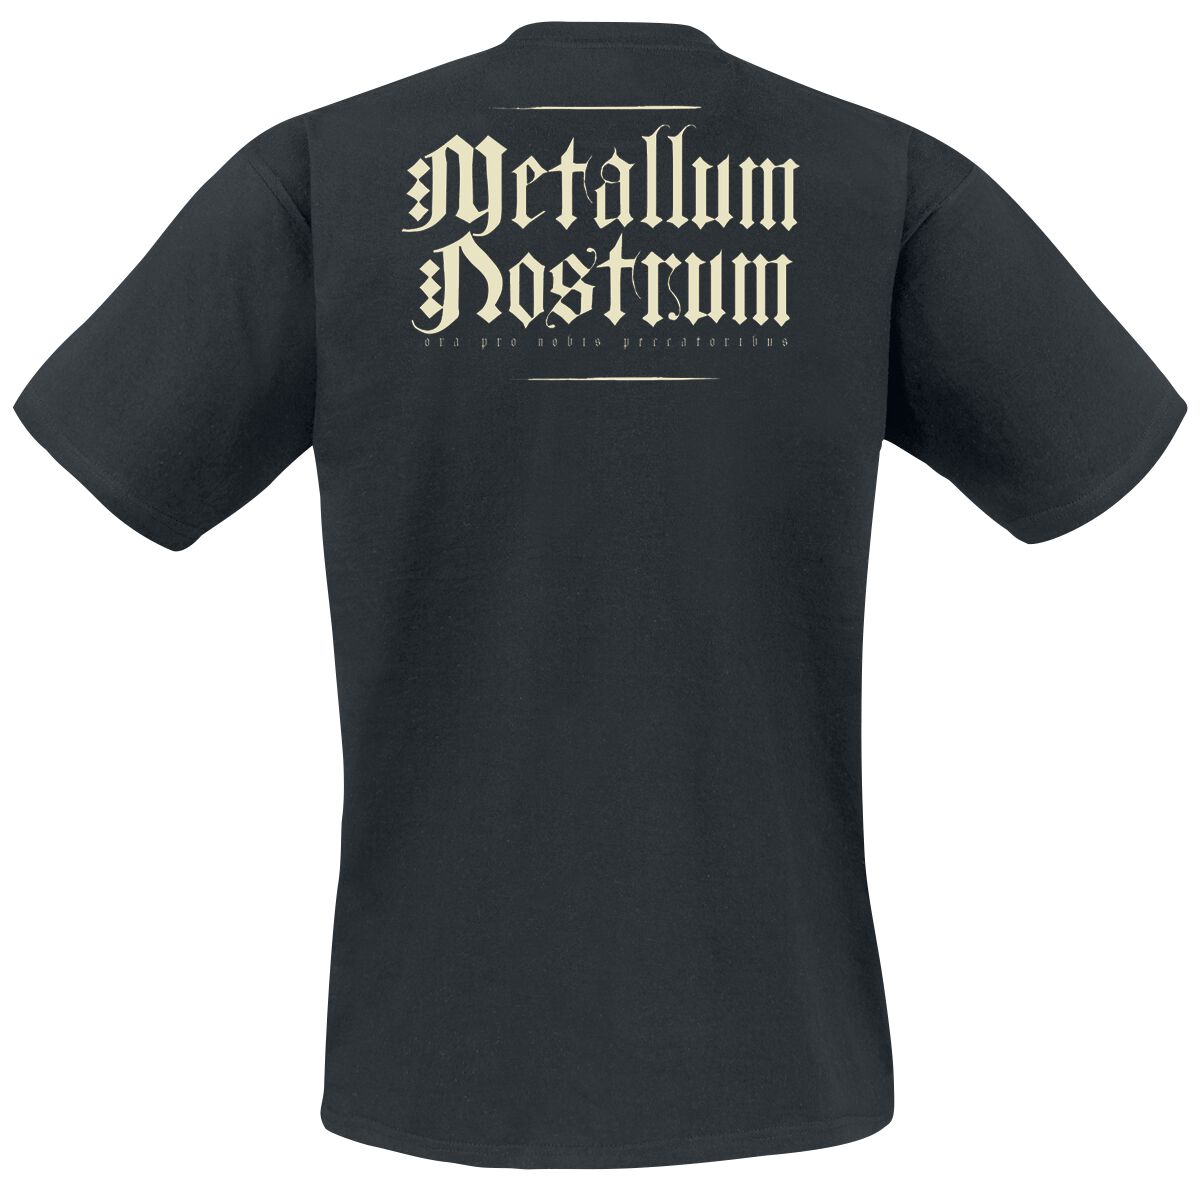 CyberRock - Comprar Camiseta Powerwolf Metallum Nostrum